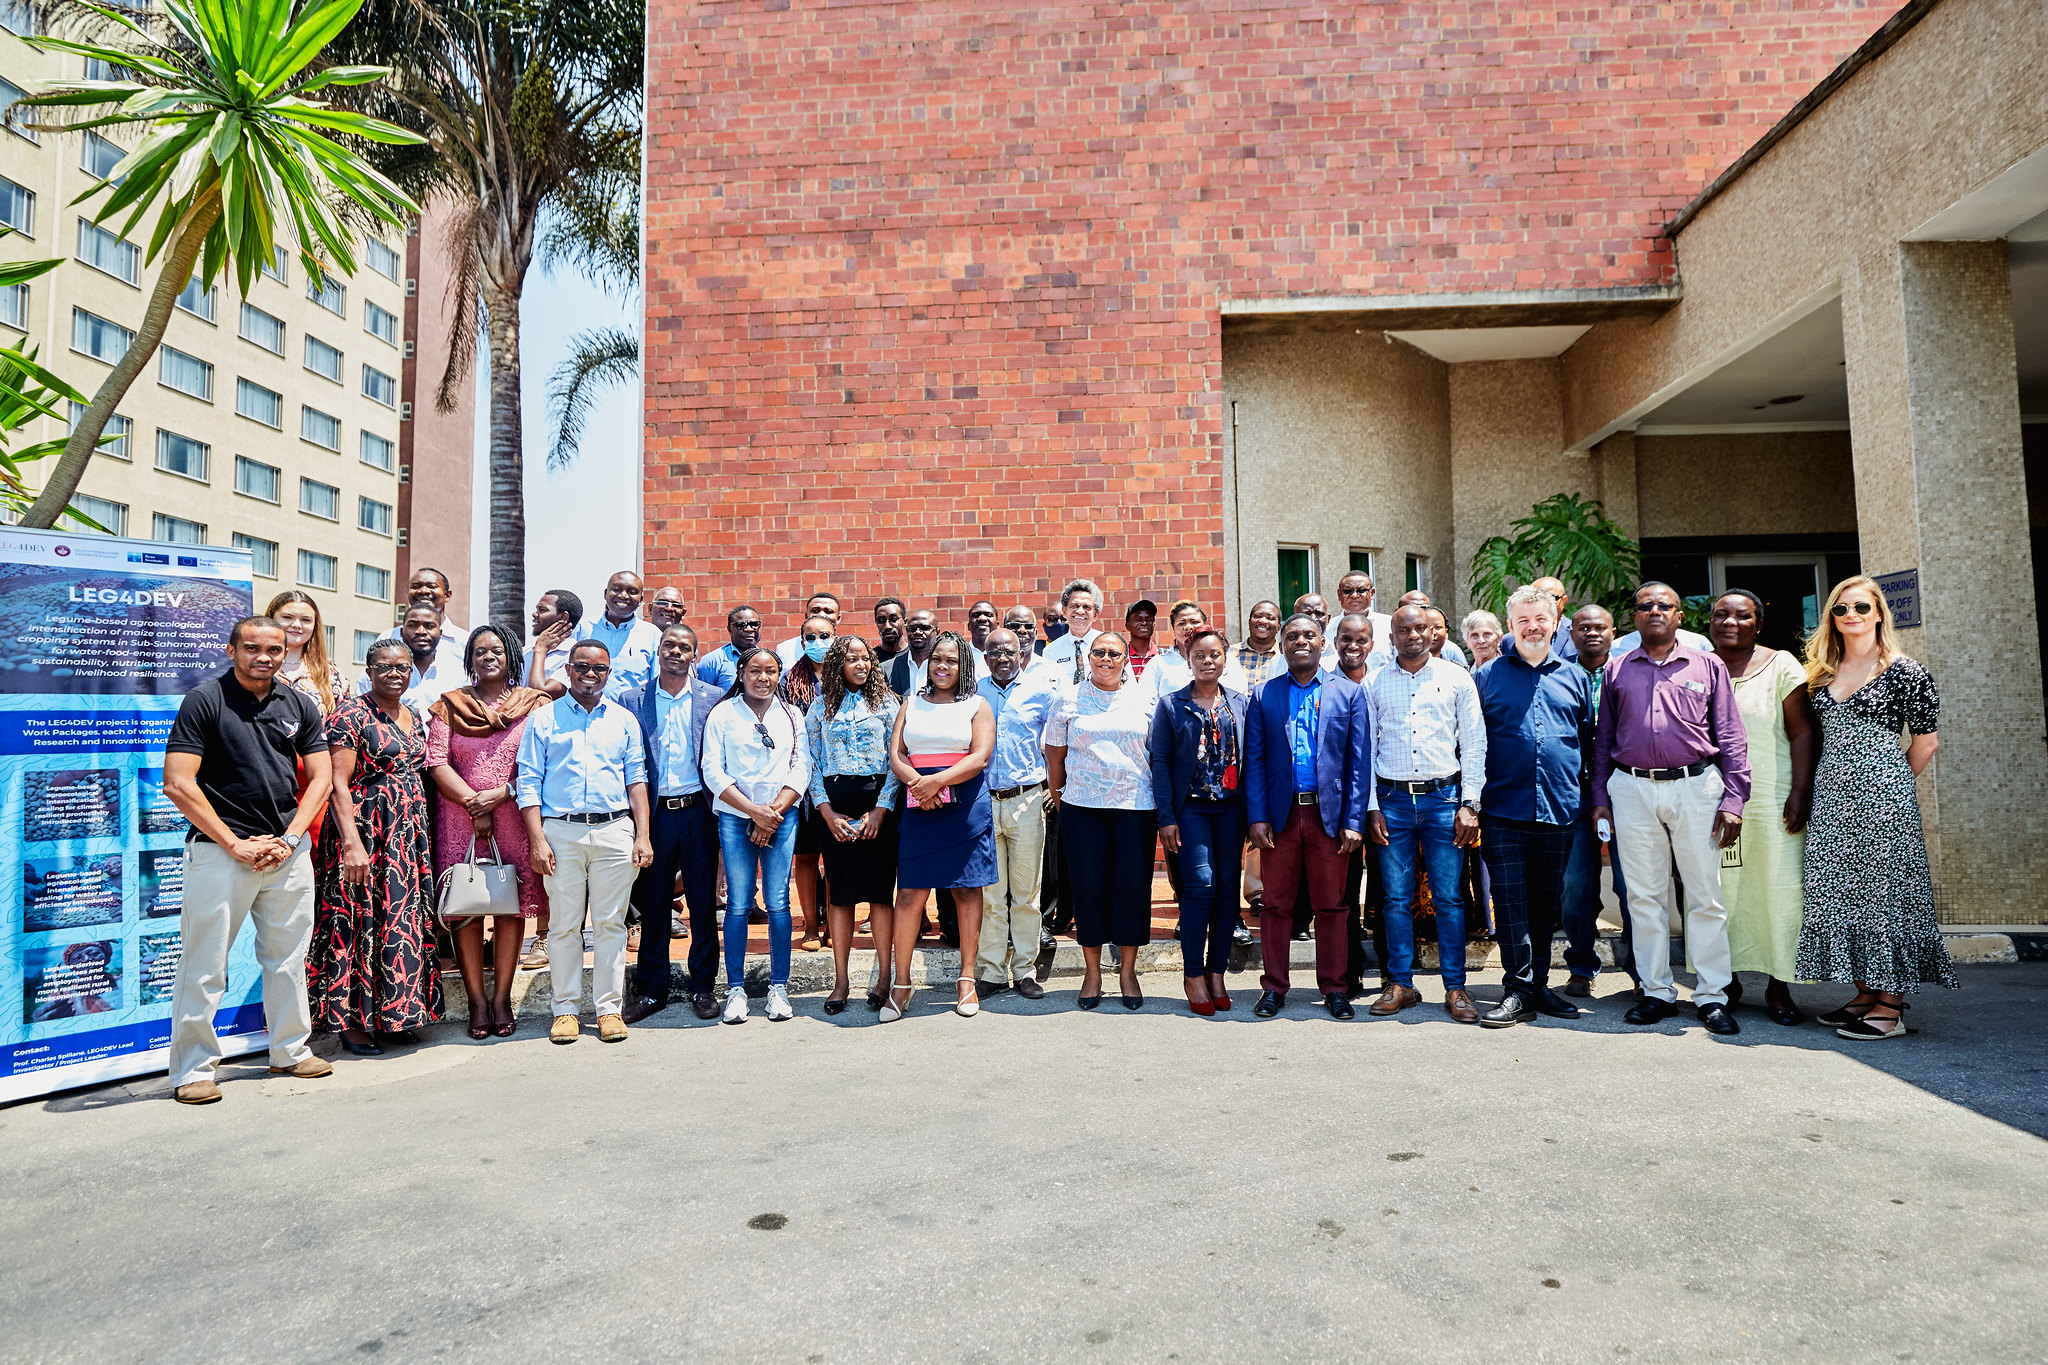 LEG4DEV project holds multi-stakeholder planning & research prioritisation workshop in Lusaka